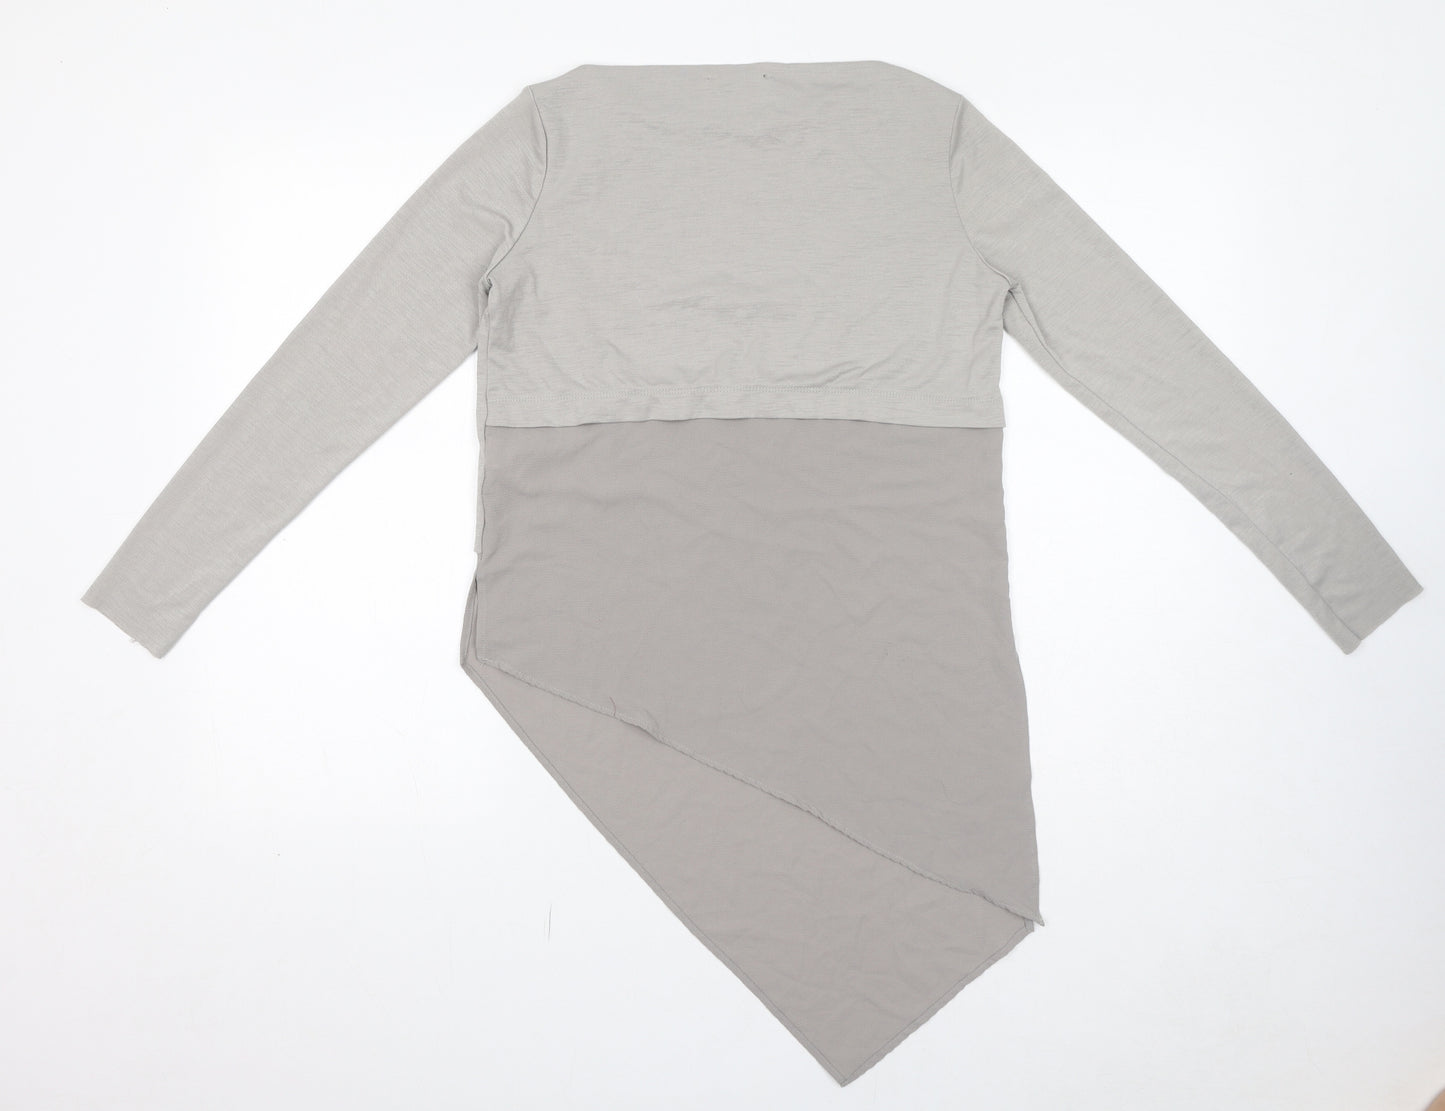 Zara Womens Beige Polyester Basic Blouse Size M Round Neck - Asymmetric